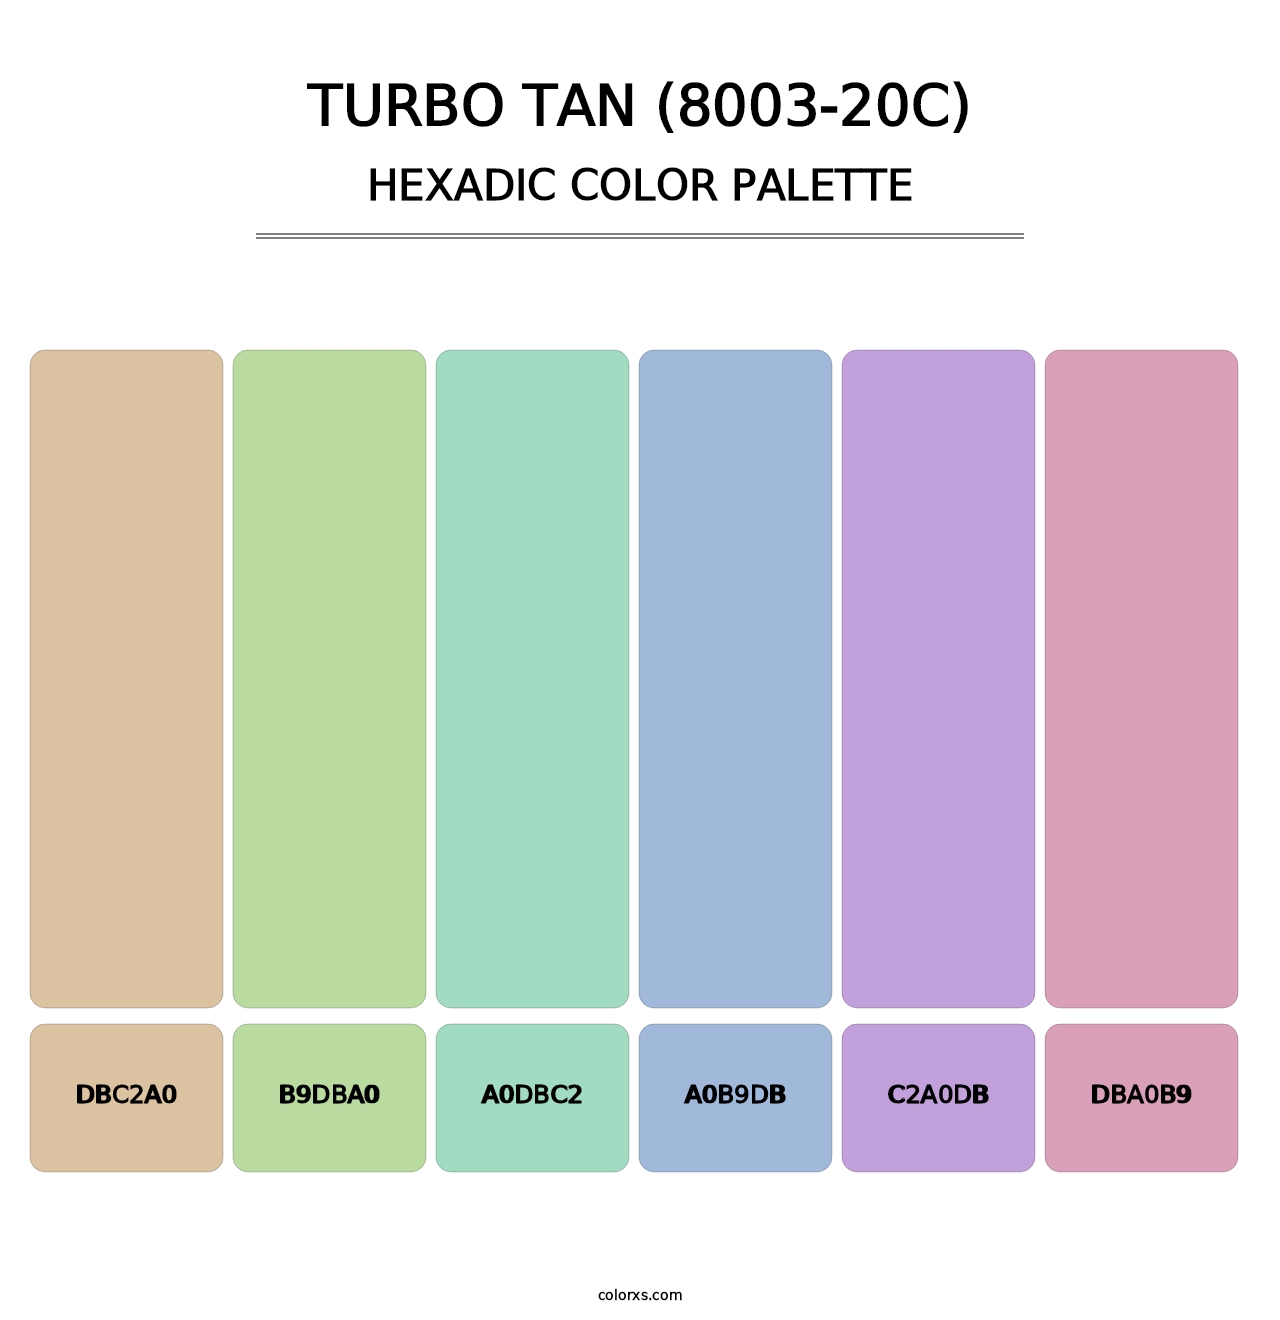 Turbo Tan (8003-20C) - Hexadic Color Palette